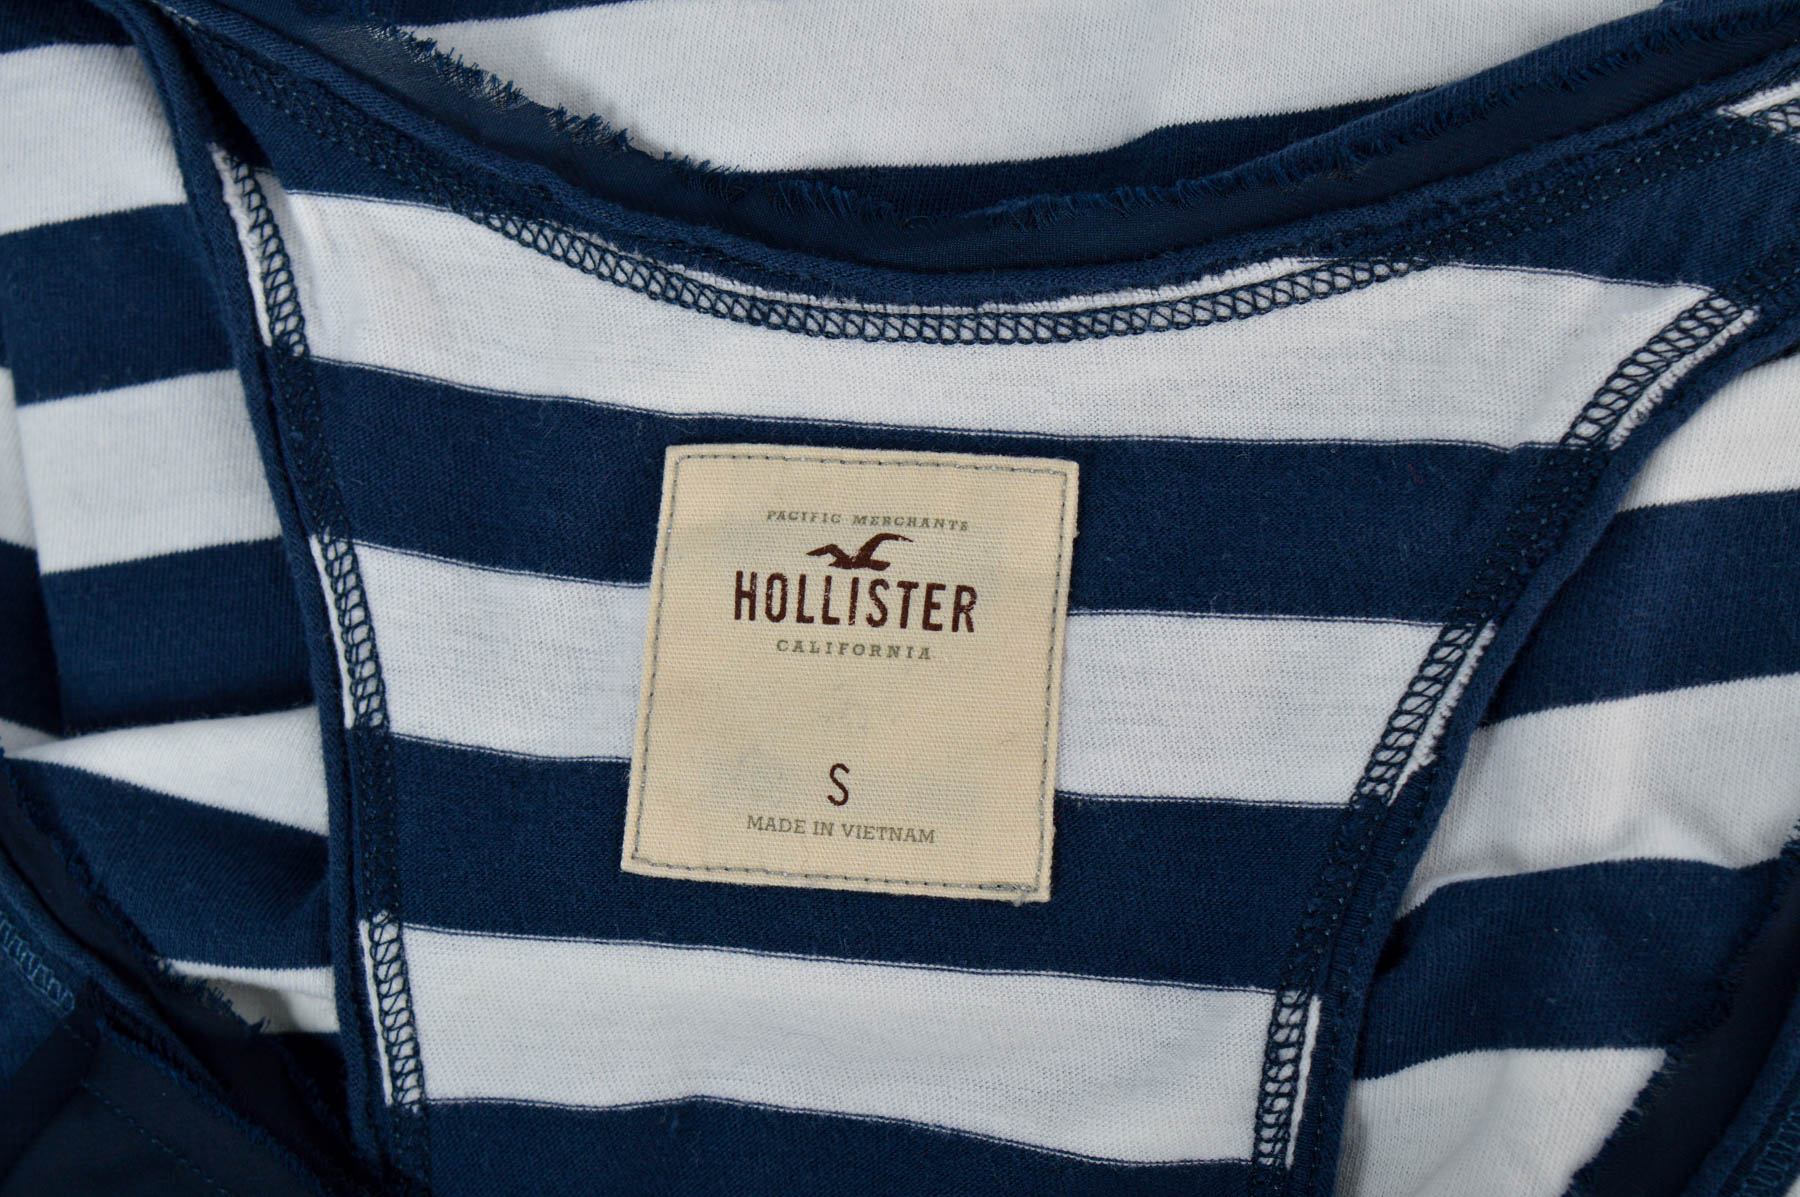 Damski podkoszulek - Hollister - 2